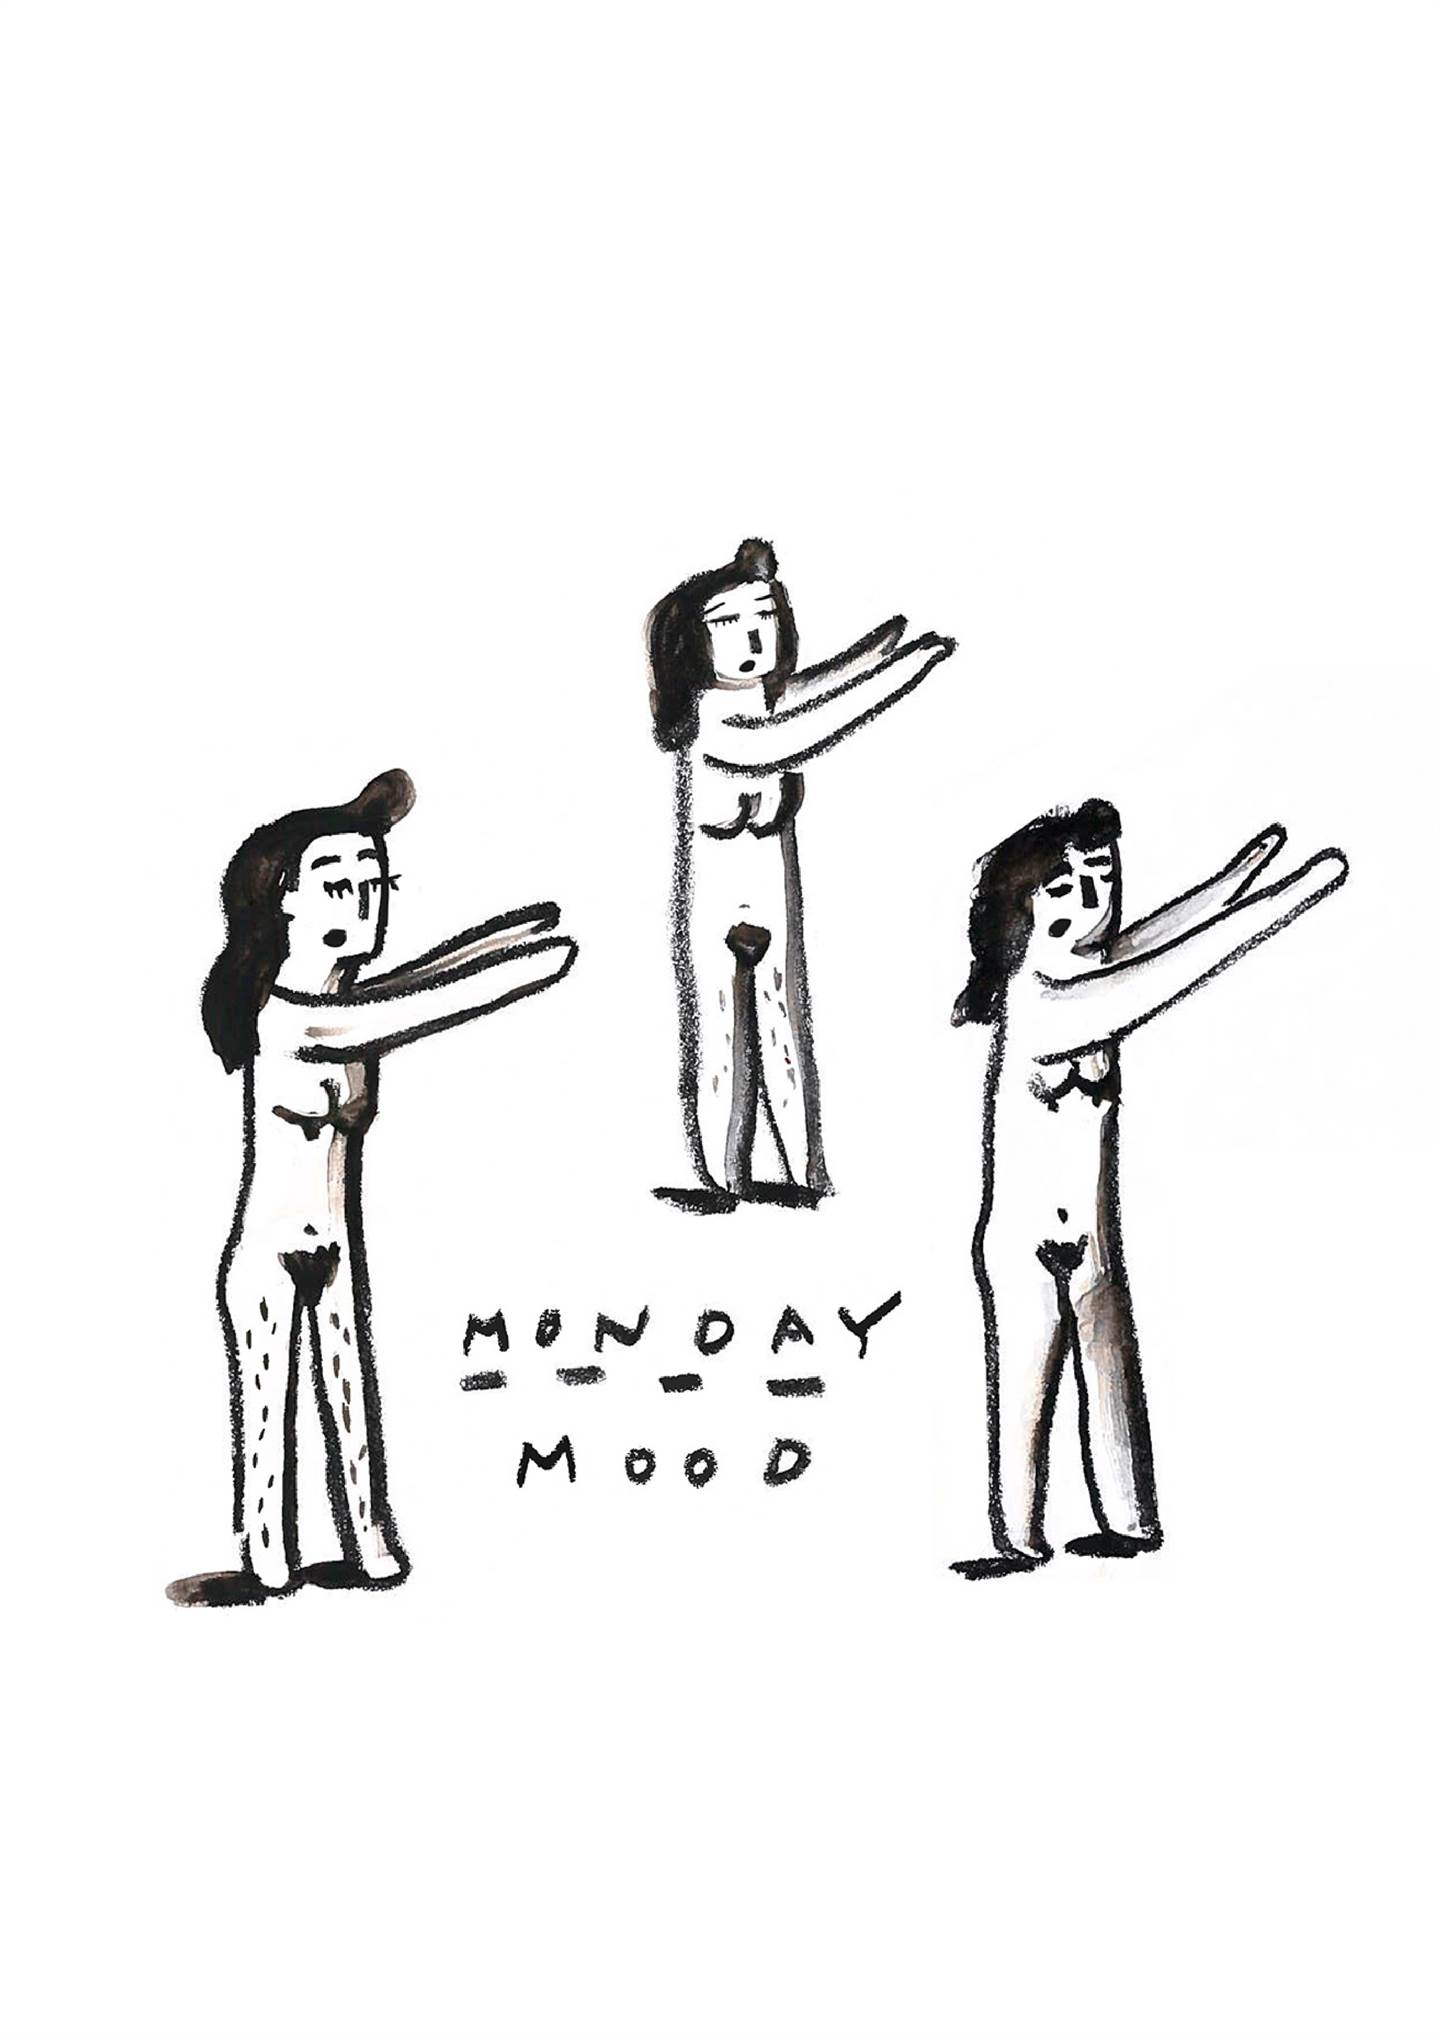 Monday Mood, original Body Digital Drawing and Illustration by Shut Up  Claudia